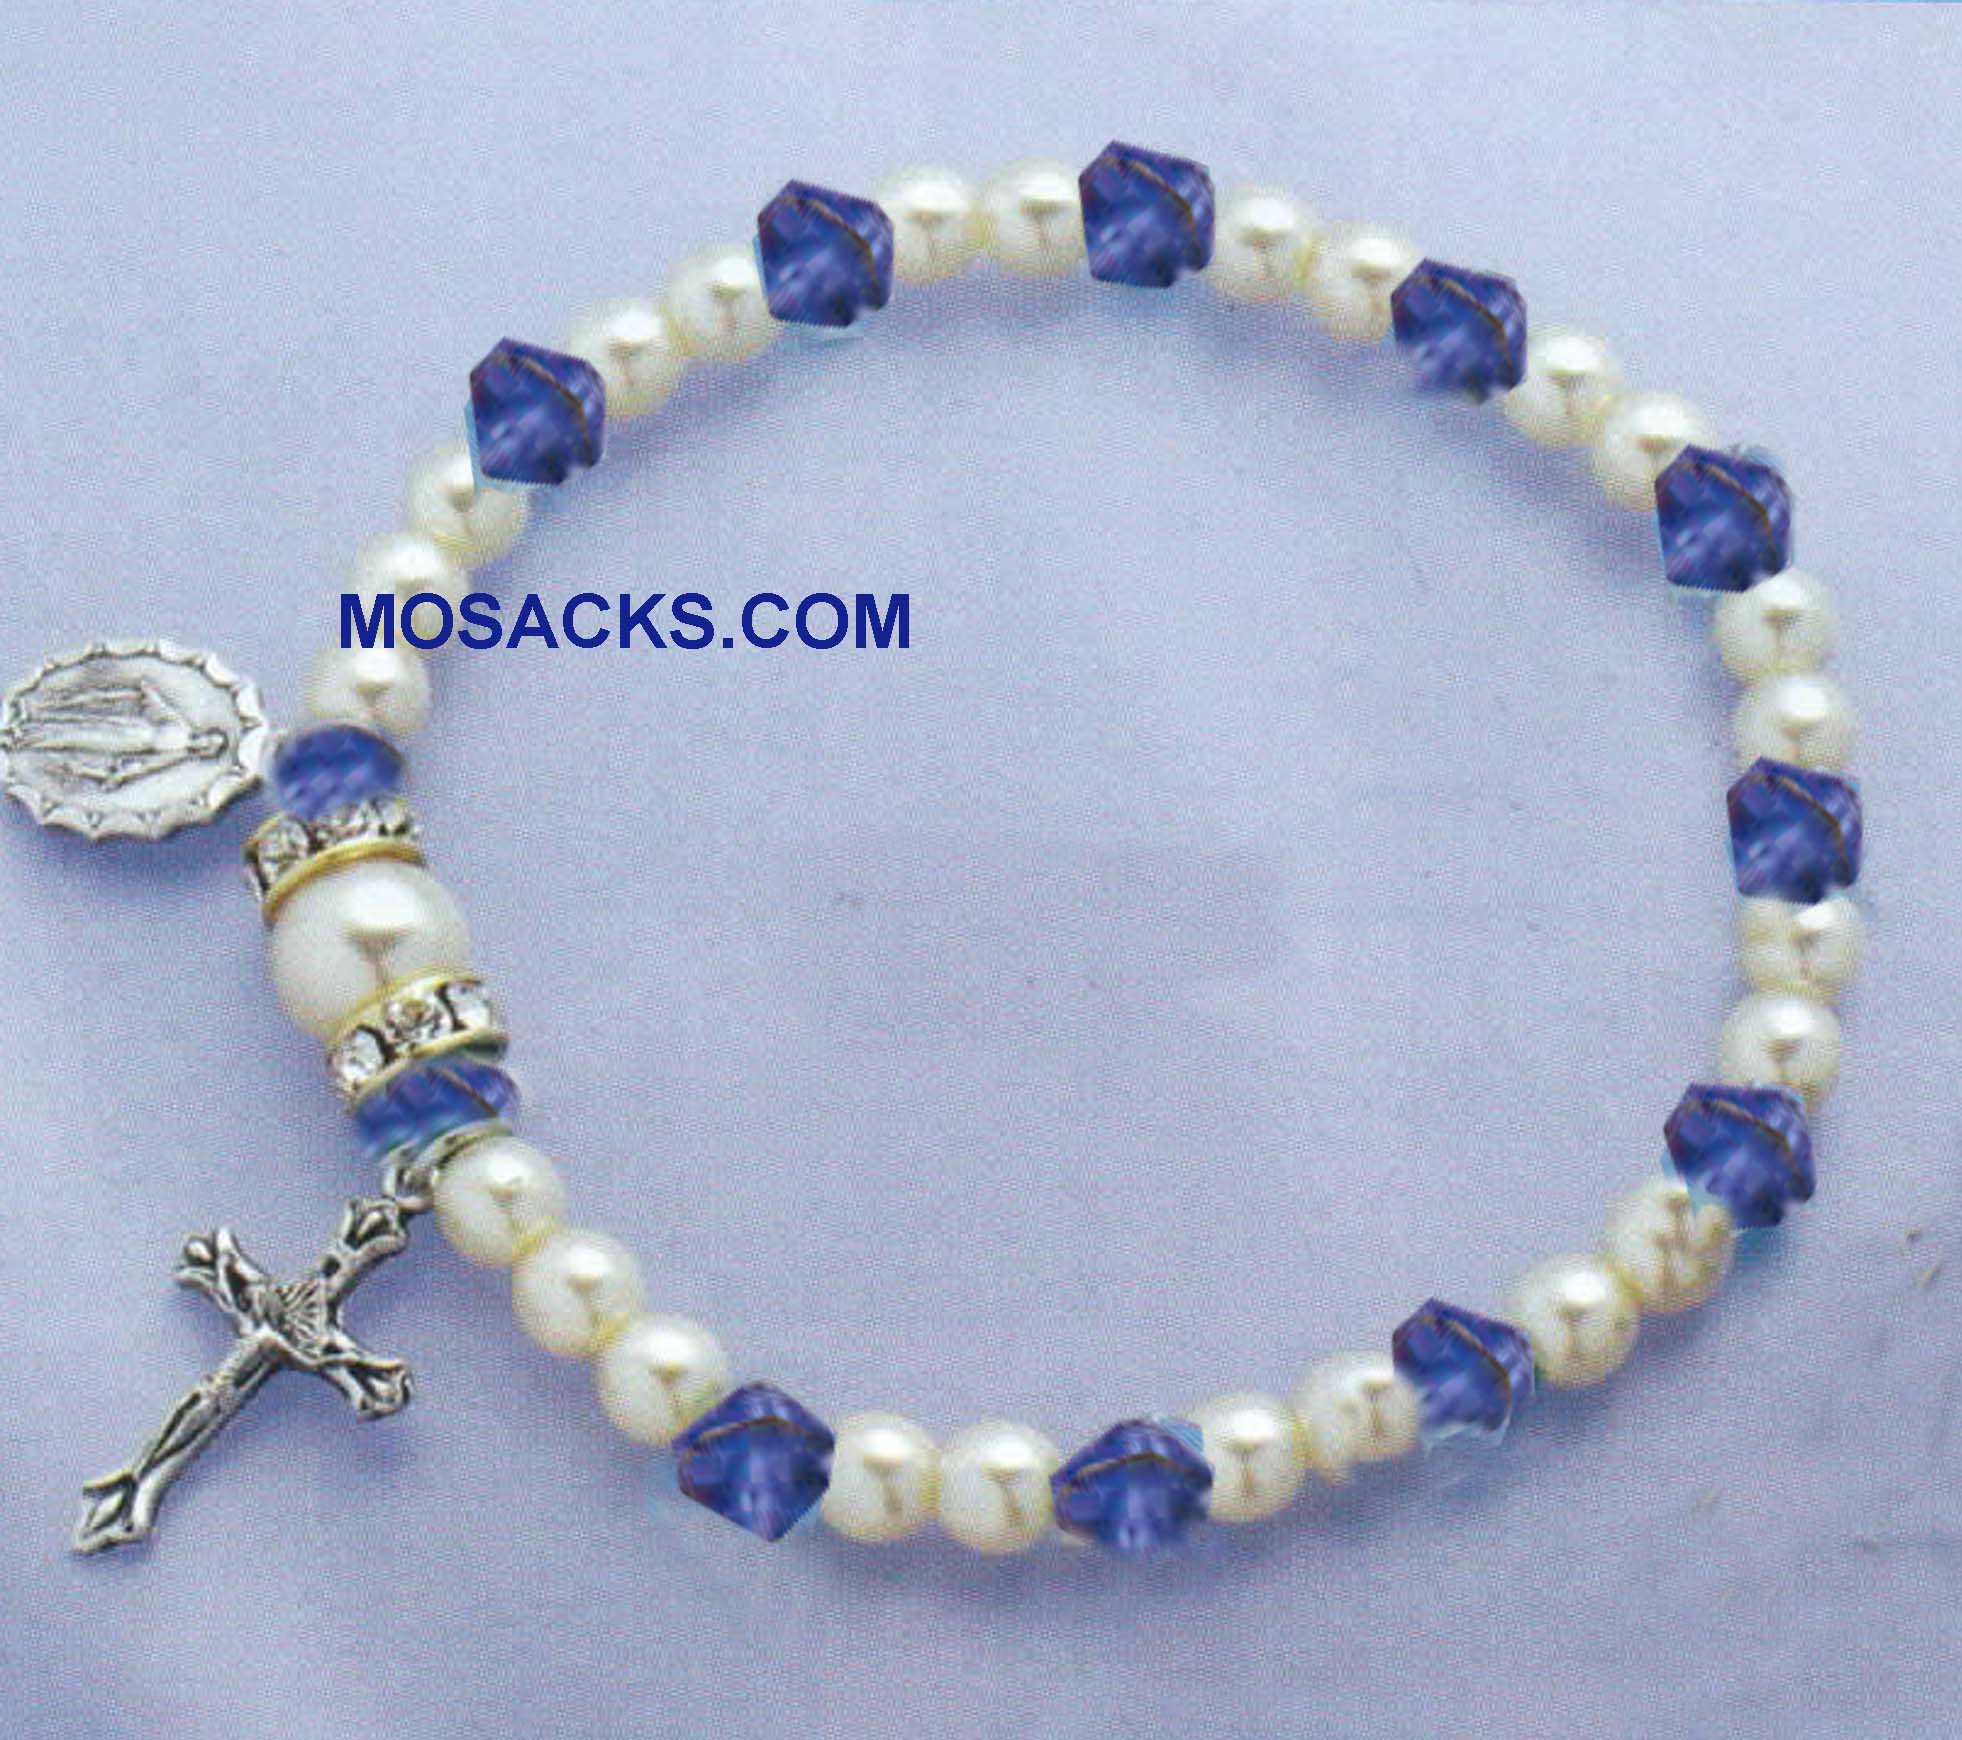 December Birthstone Rosary Stretch Bracelet Blue Zircon - 45280ZC Blue Zircon One Decade Rosary Bracelet for December